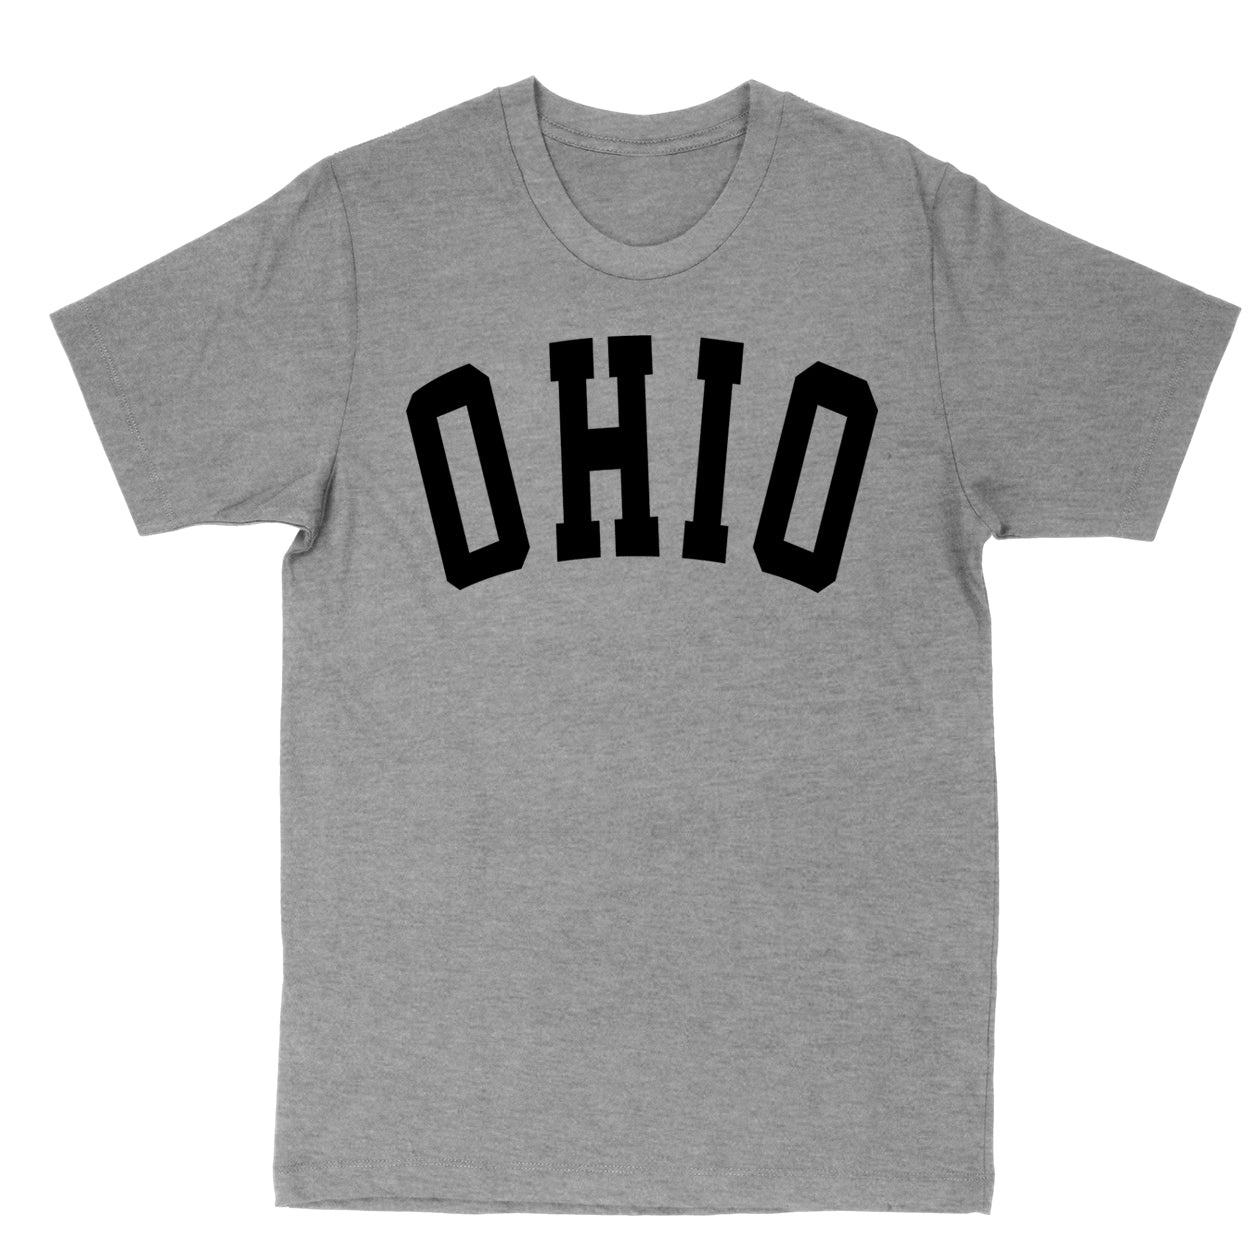 Tailgate Ohio Unisex T-Shirt